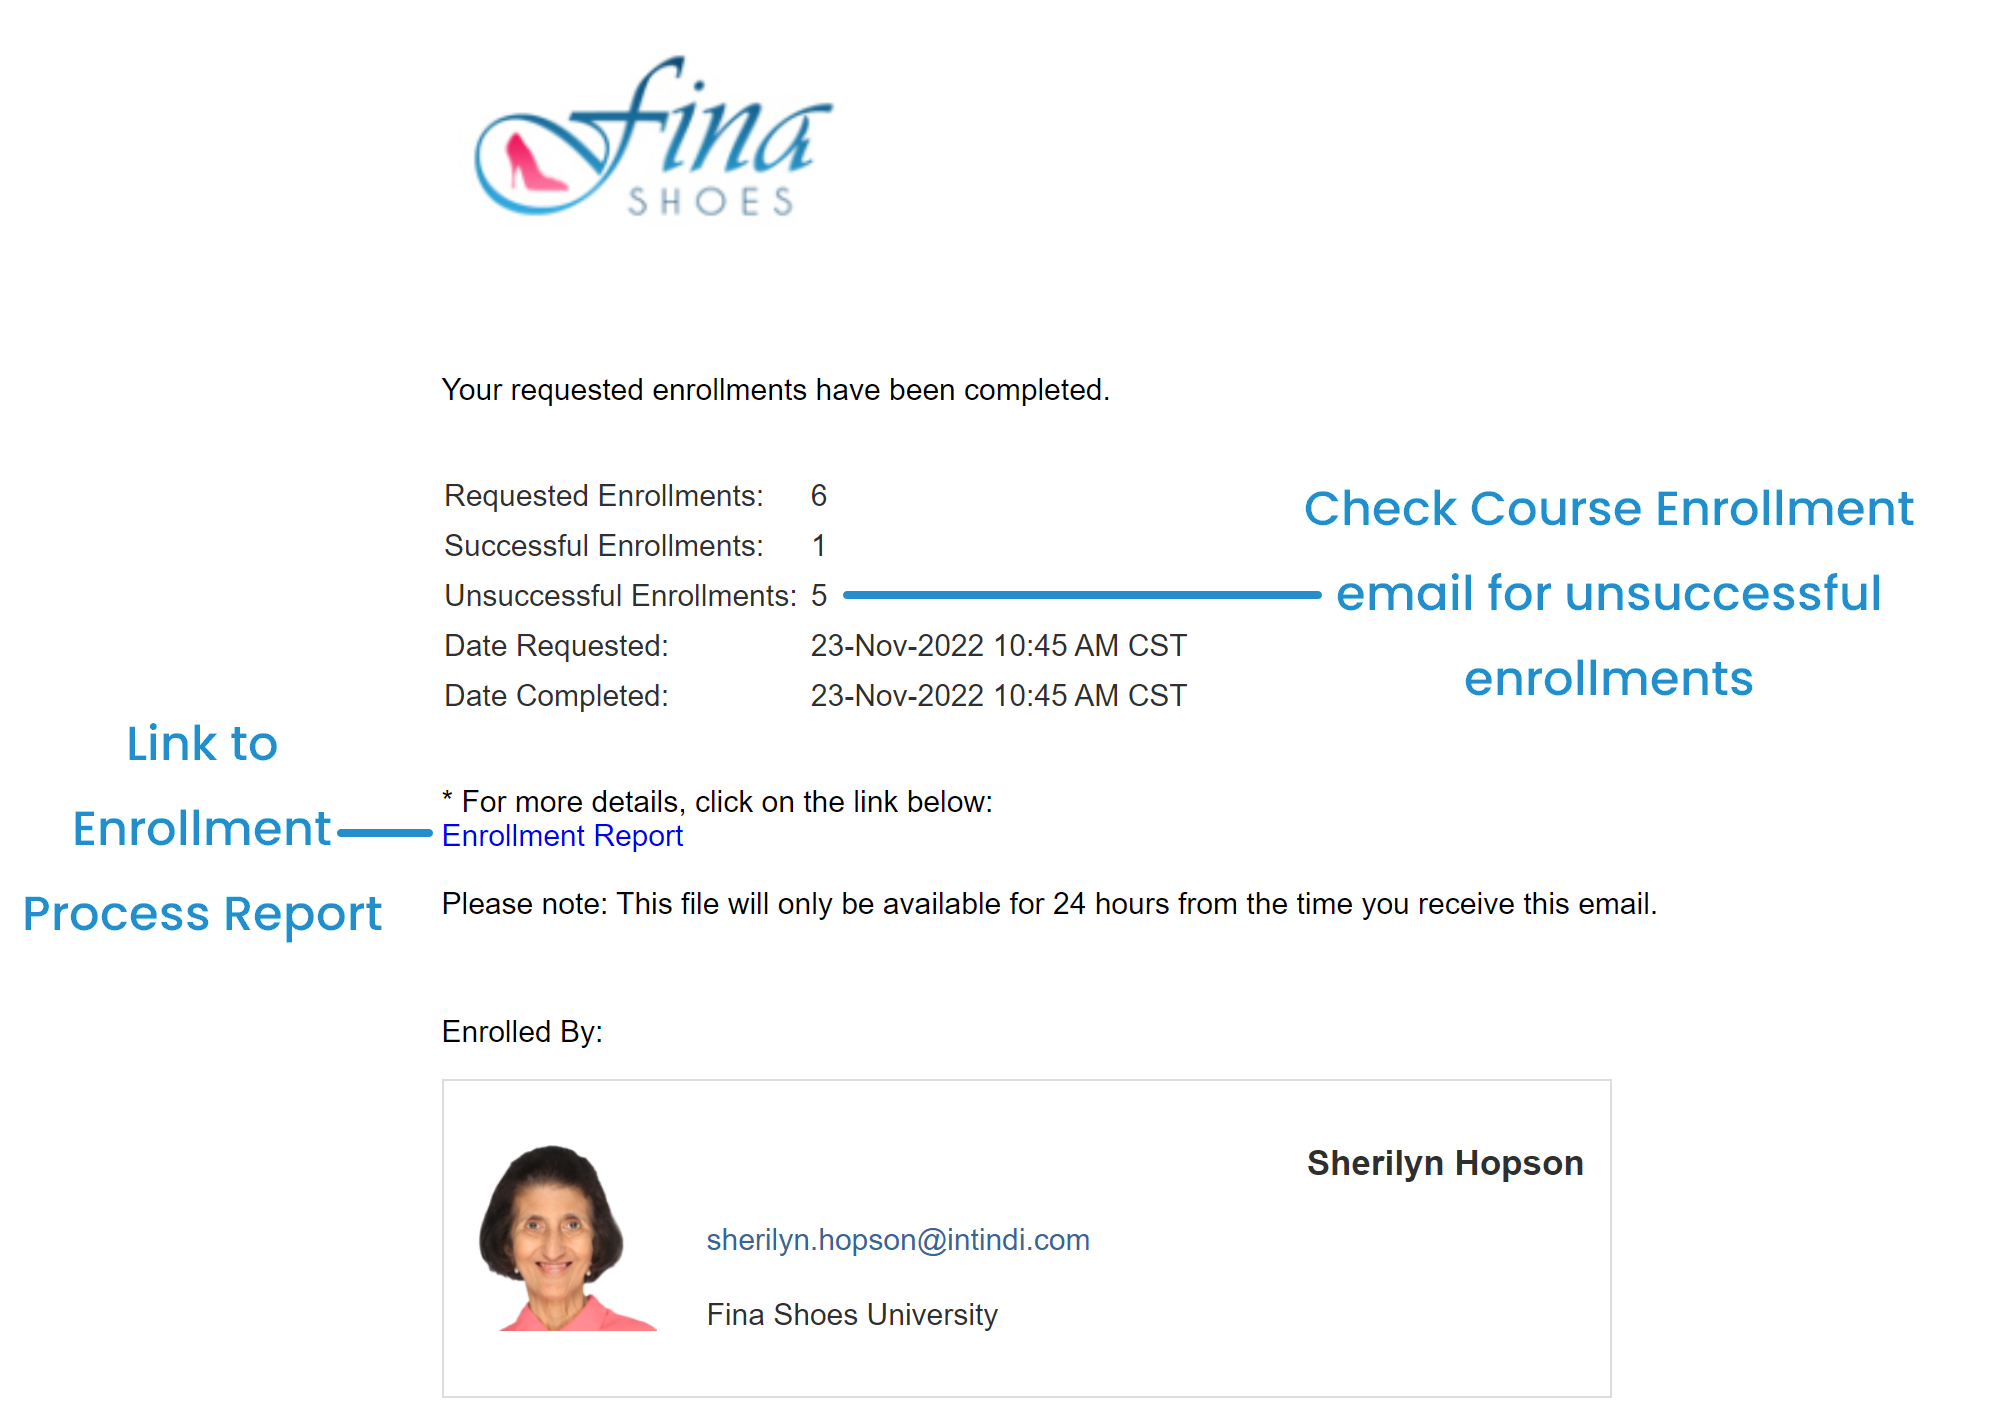 Course Enrollment Email - Unsuccessful 20221205